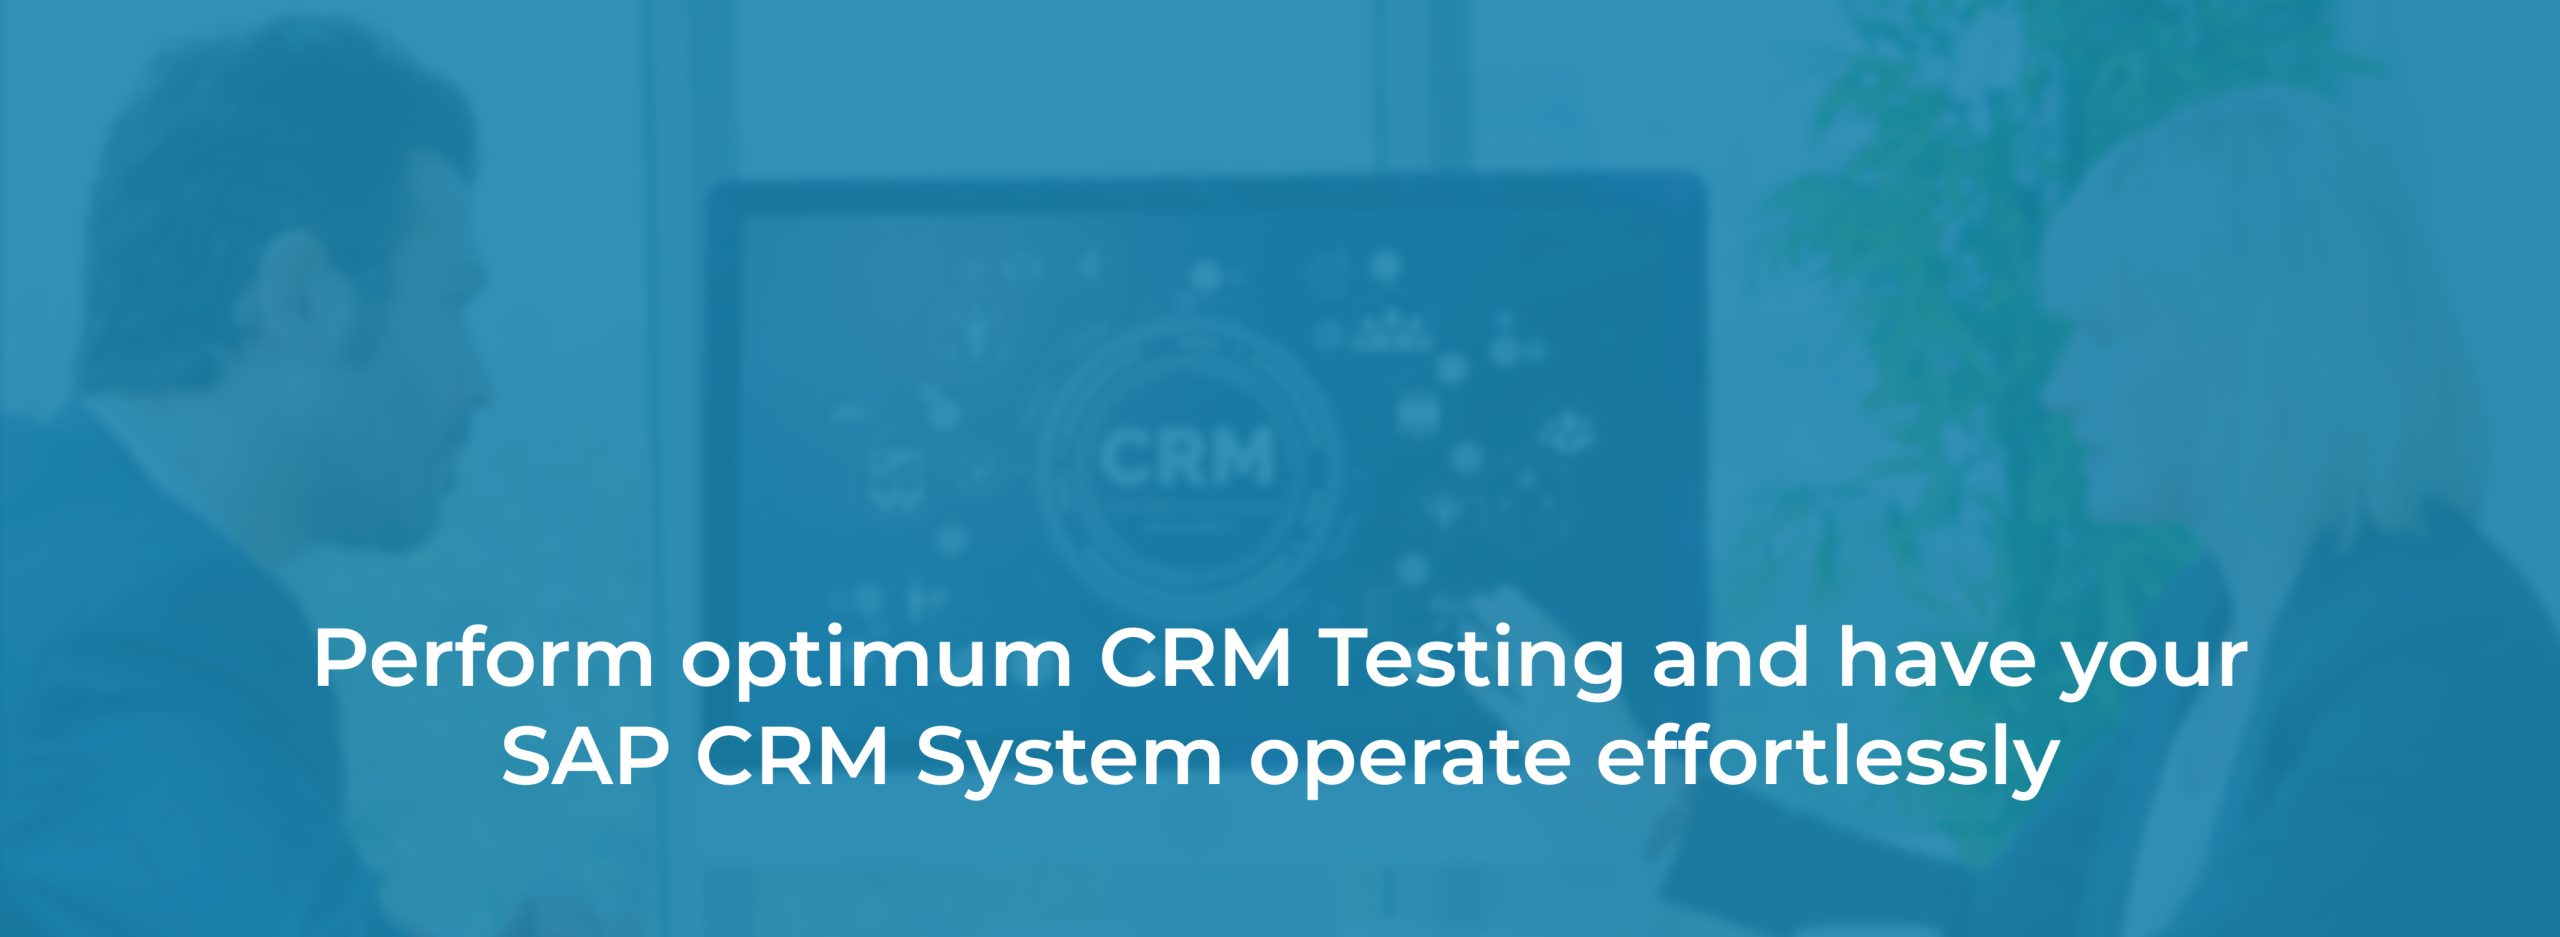 SAP CRM Testing